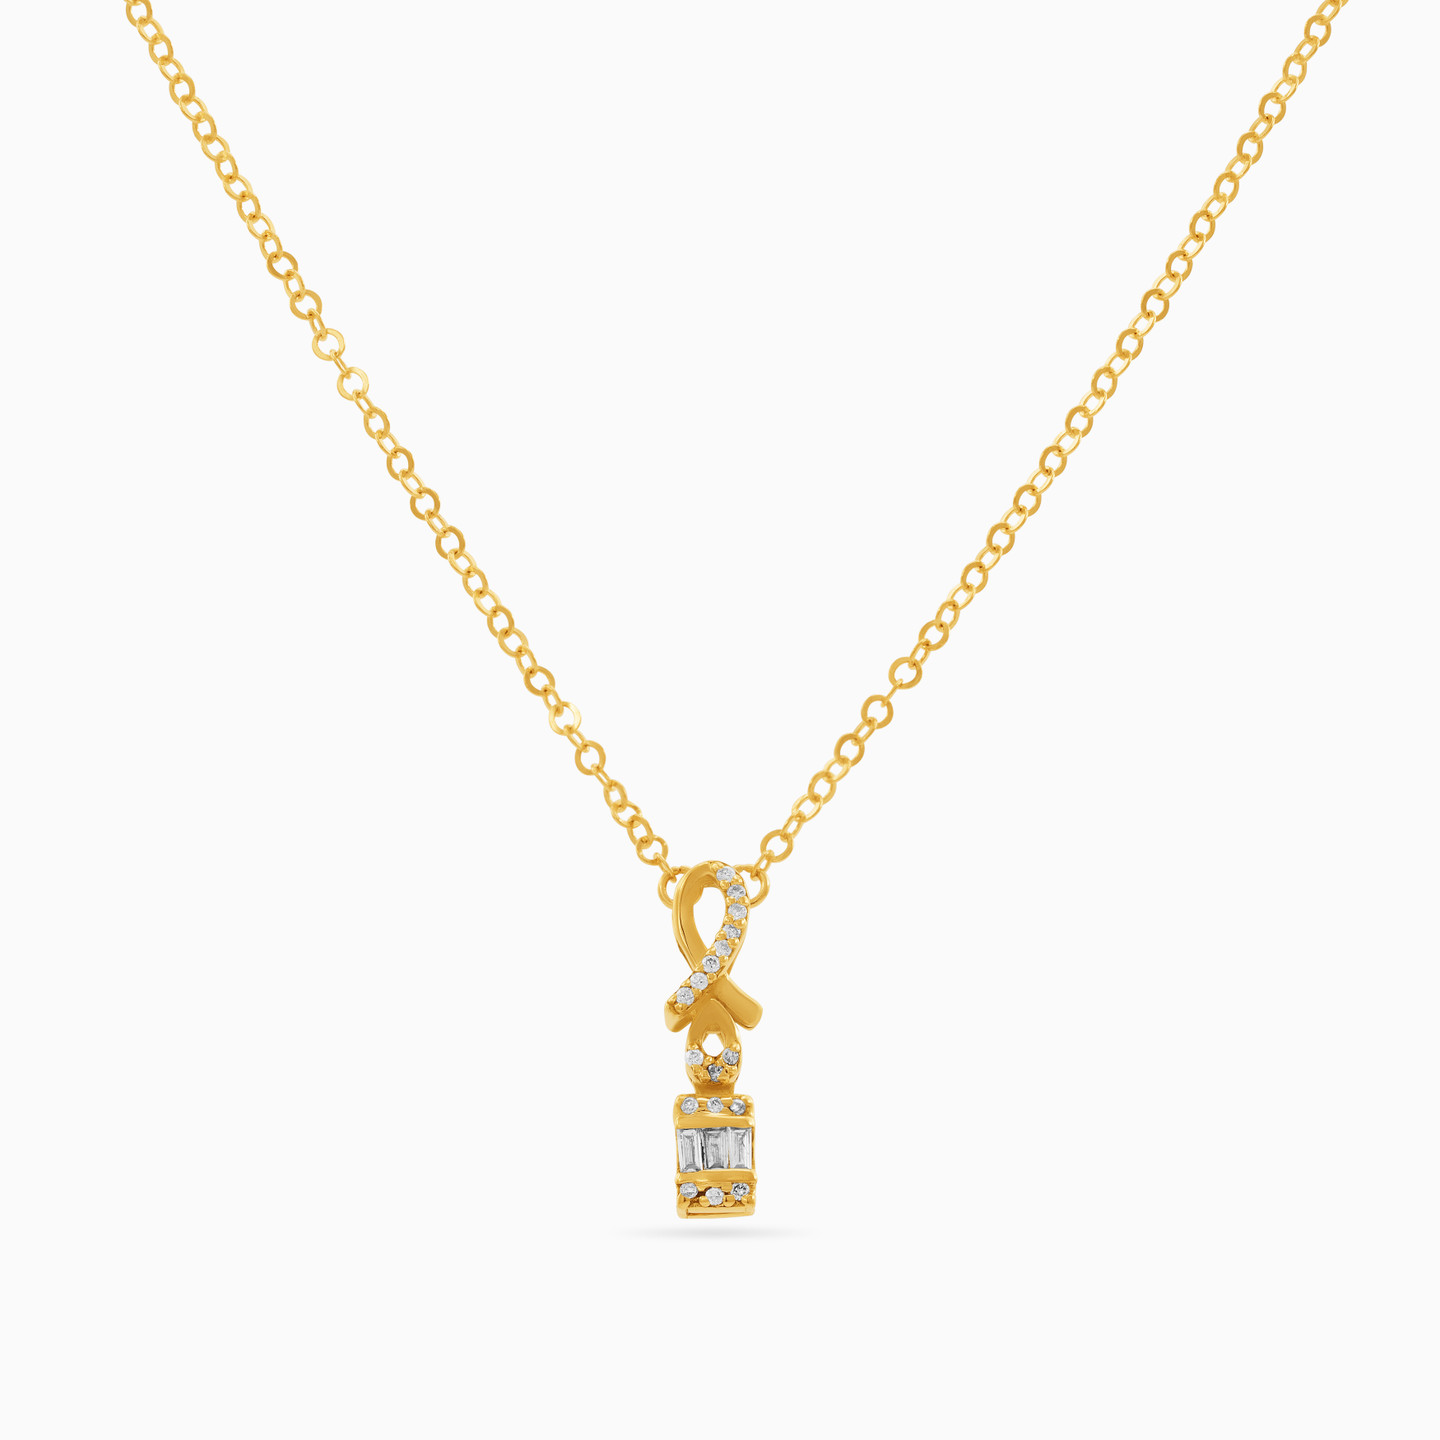 18K Gold Diamond Pendant Necklace - 6